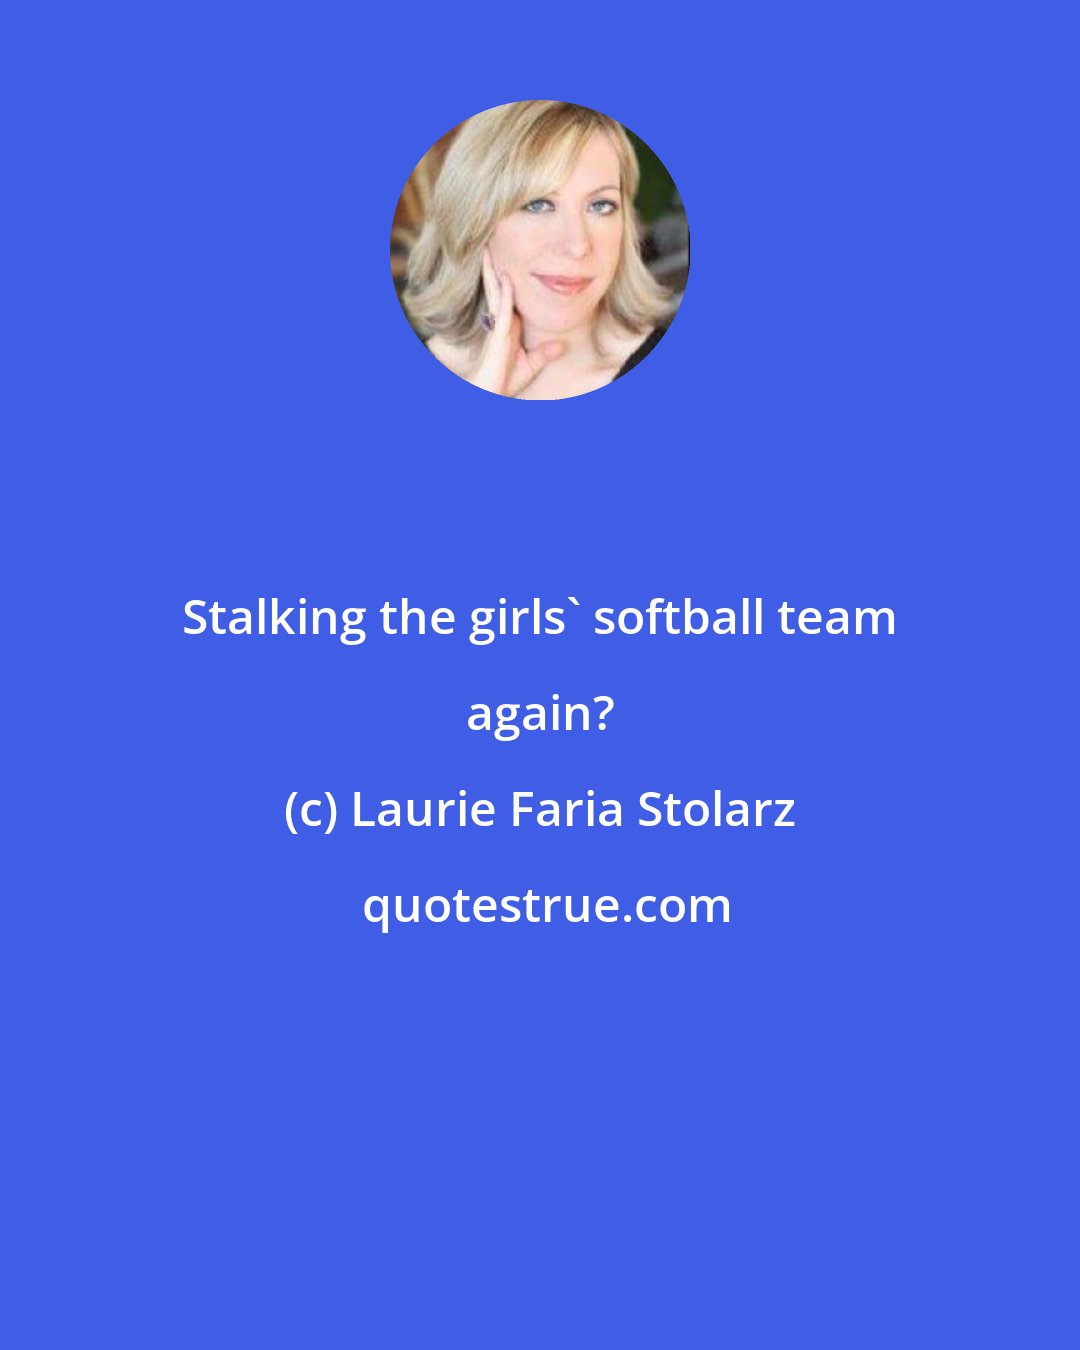 Laurie Faria Stolarz: Stalking the girls' softball team again?